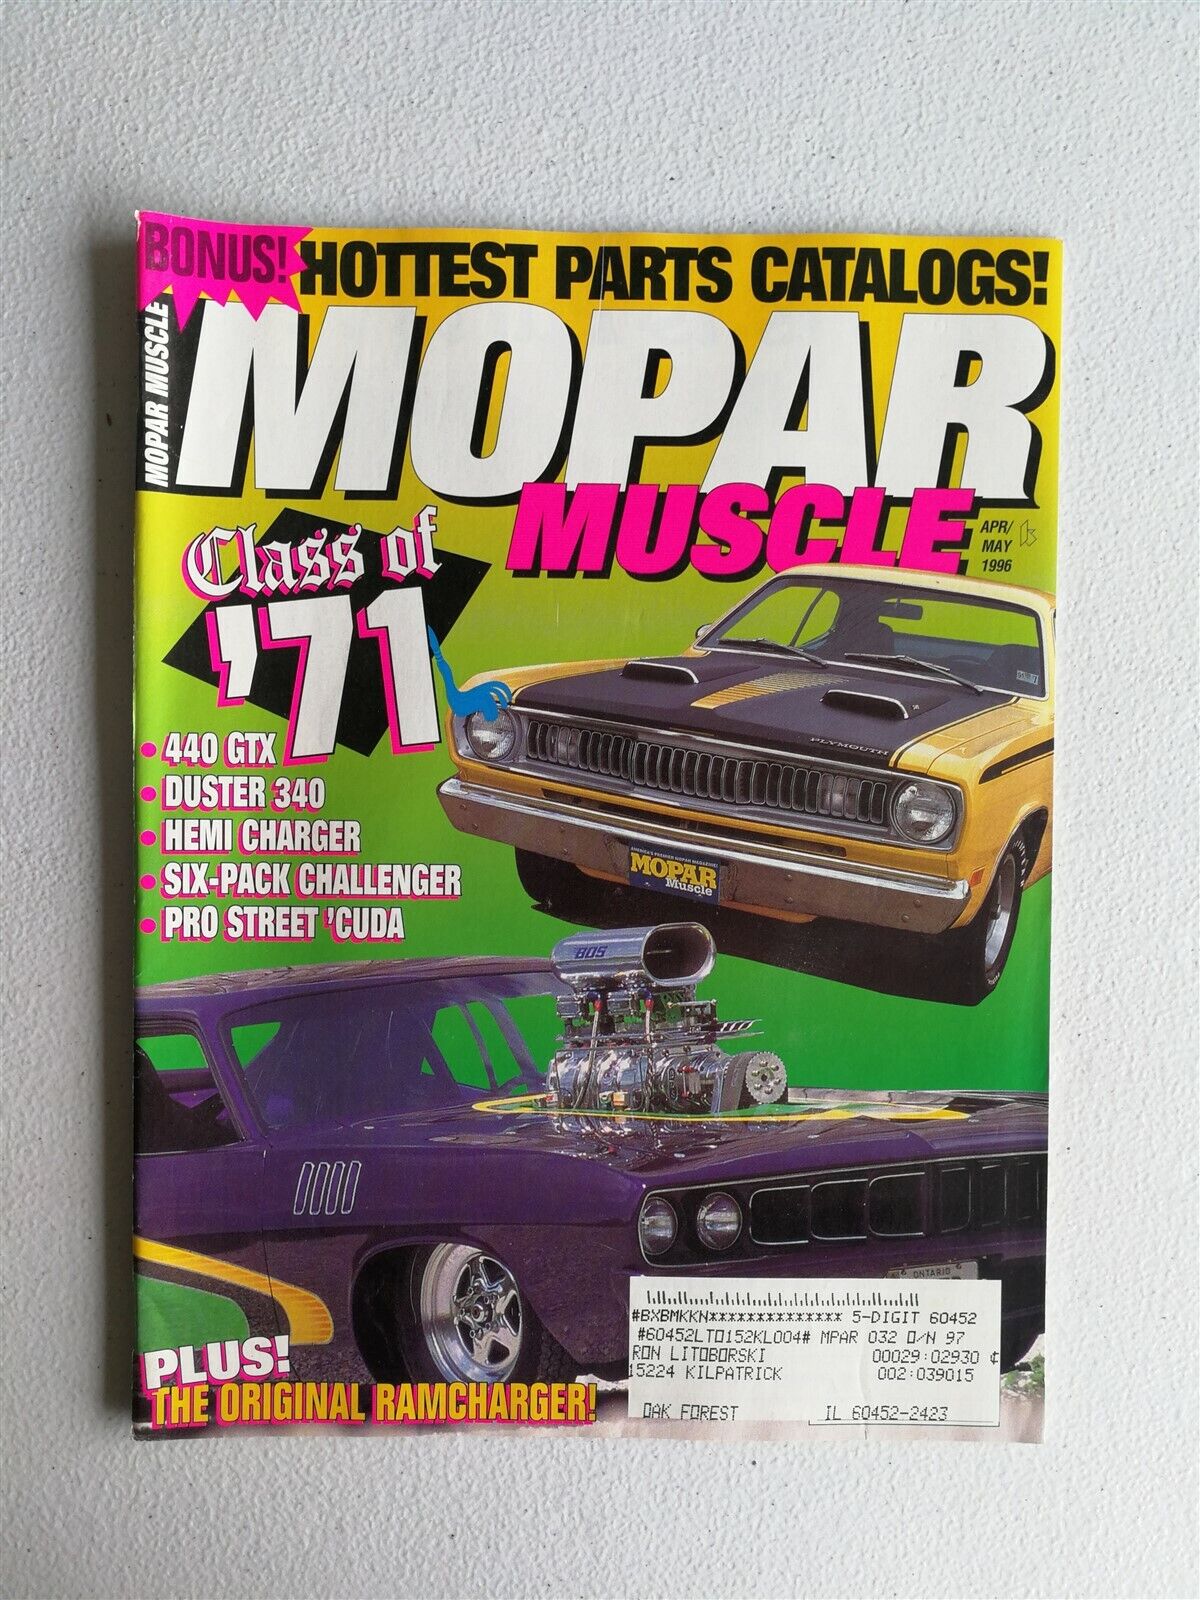 Mopar Muscle May 1996 - 1971 Dodge Challenger - 1971 Plymouht GTX - Duster 340